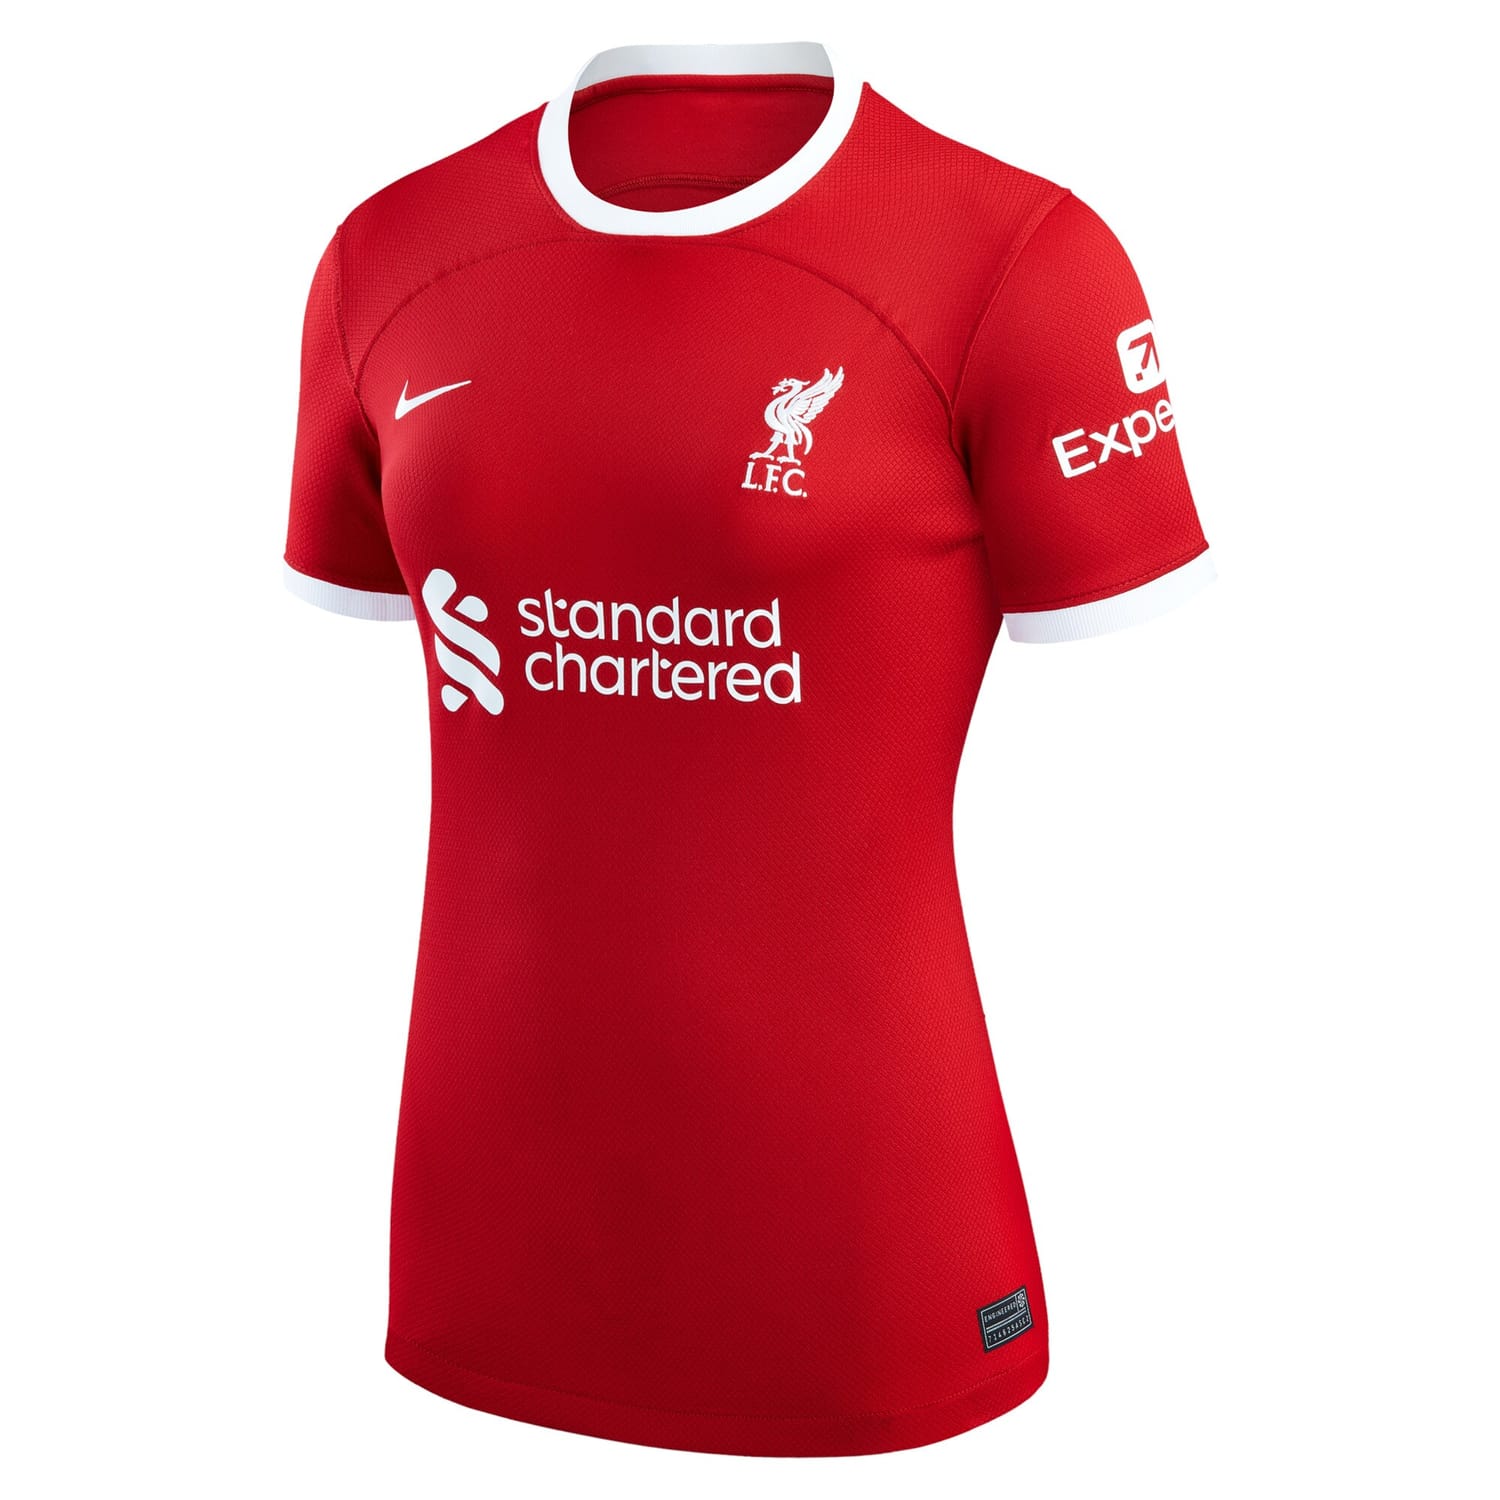 Premier League Liverpool Home Jersey Shirt 2023-24 player Diogo Jota 20 printing for Women